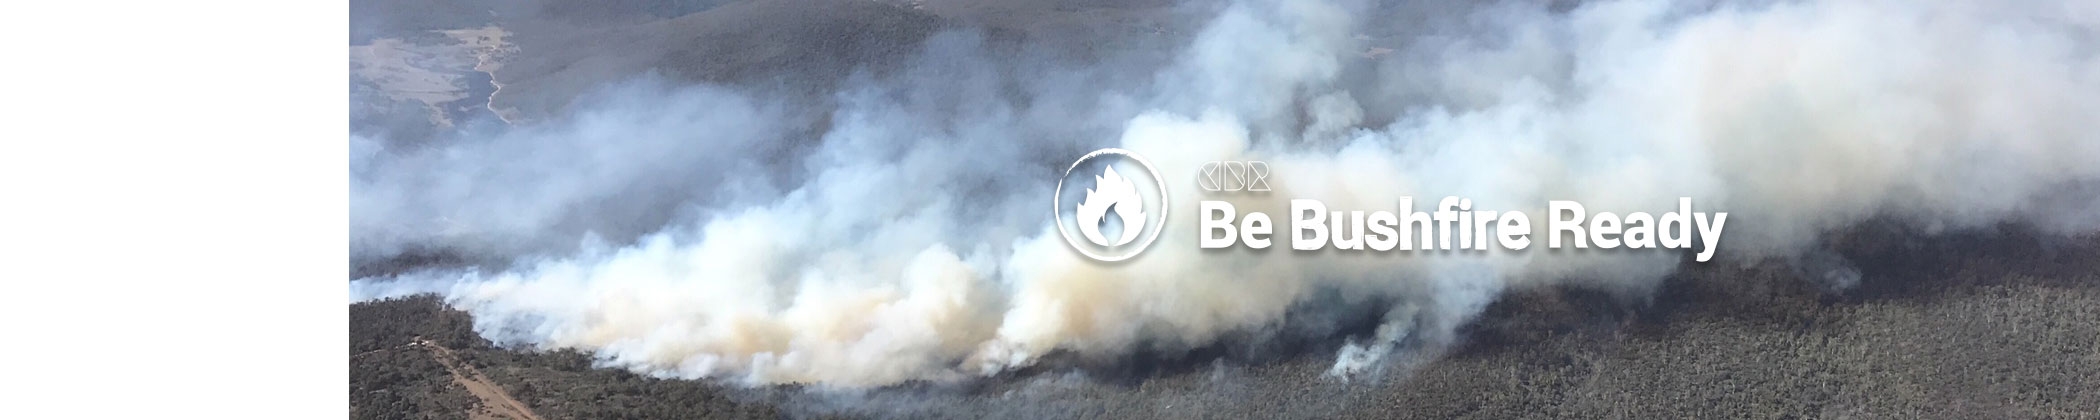 CBR-be-bushfire-ready-Banner